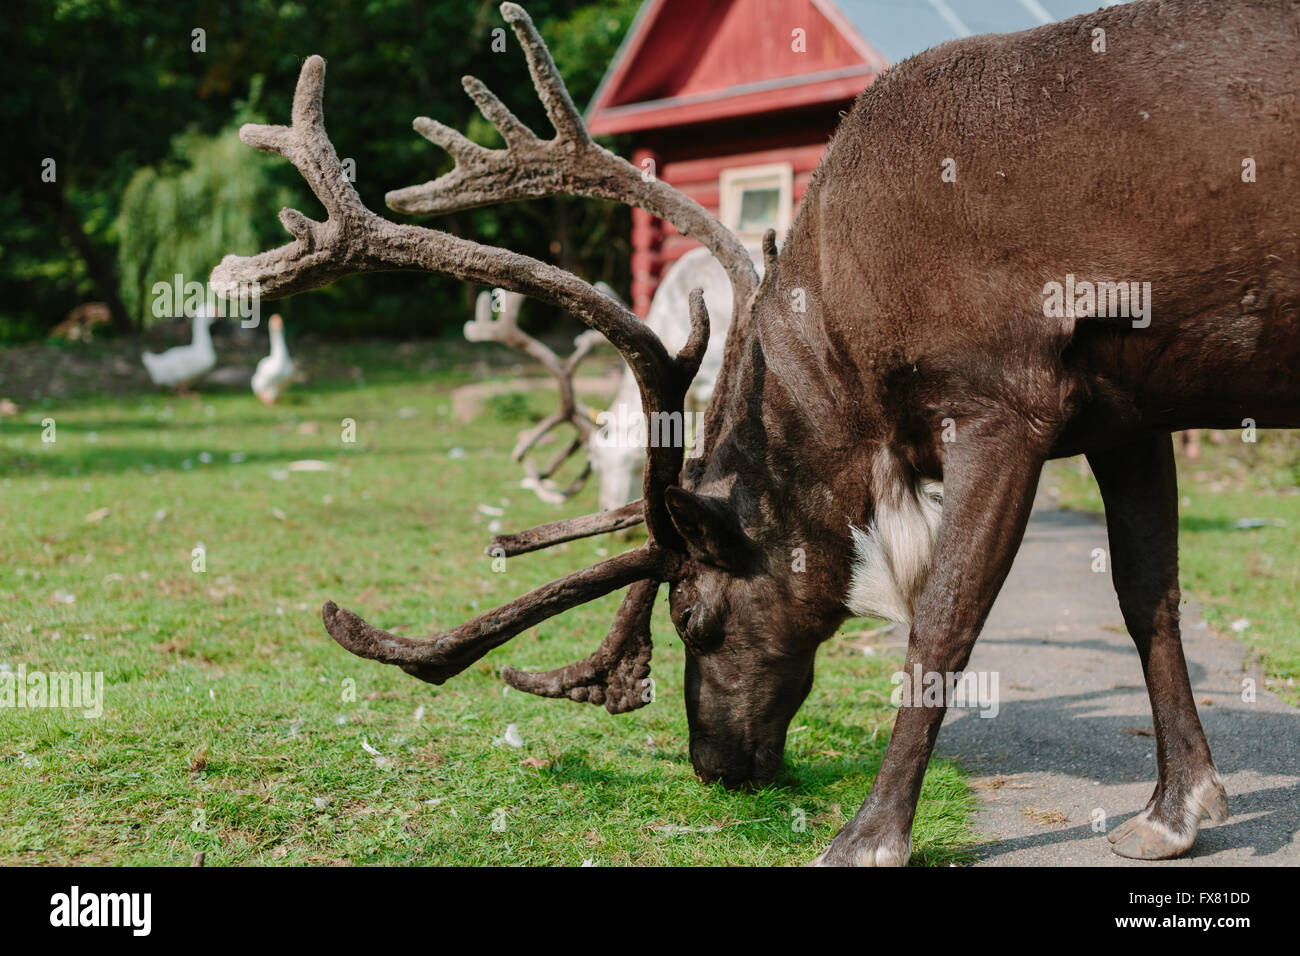 Big brown deer eating grass. Stock Photo